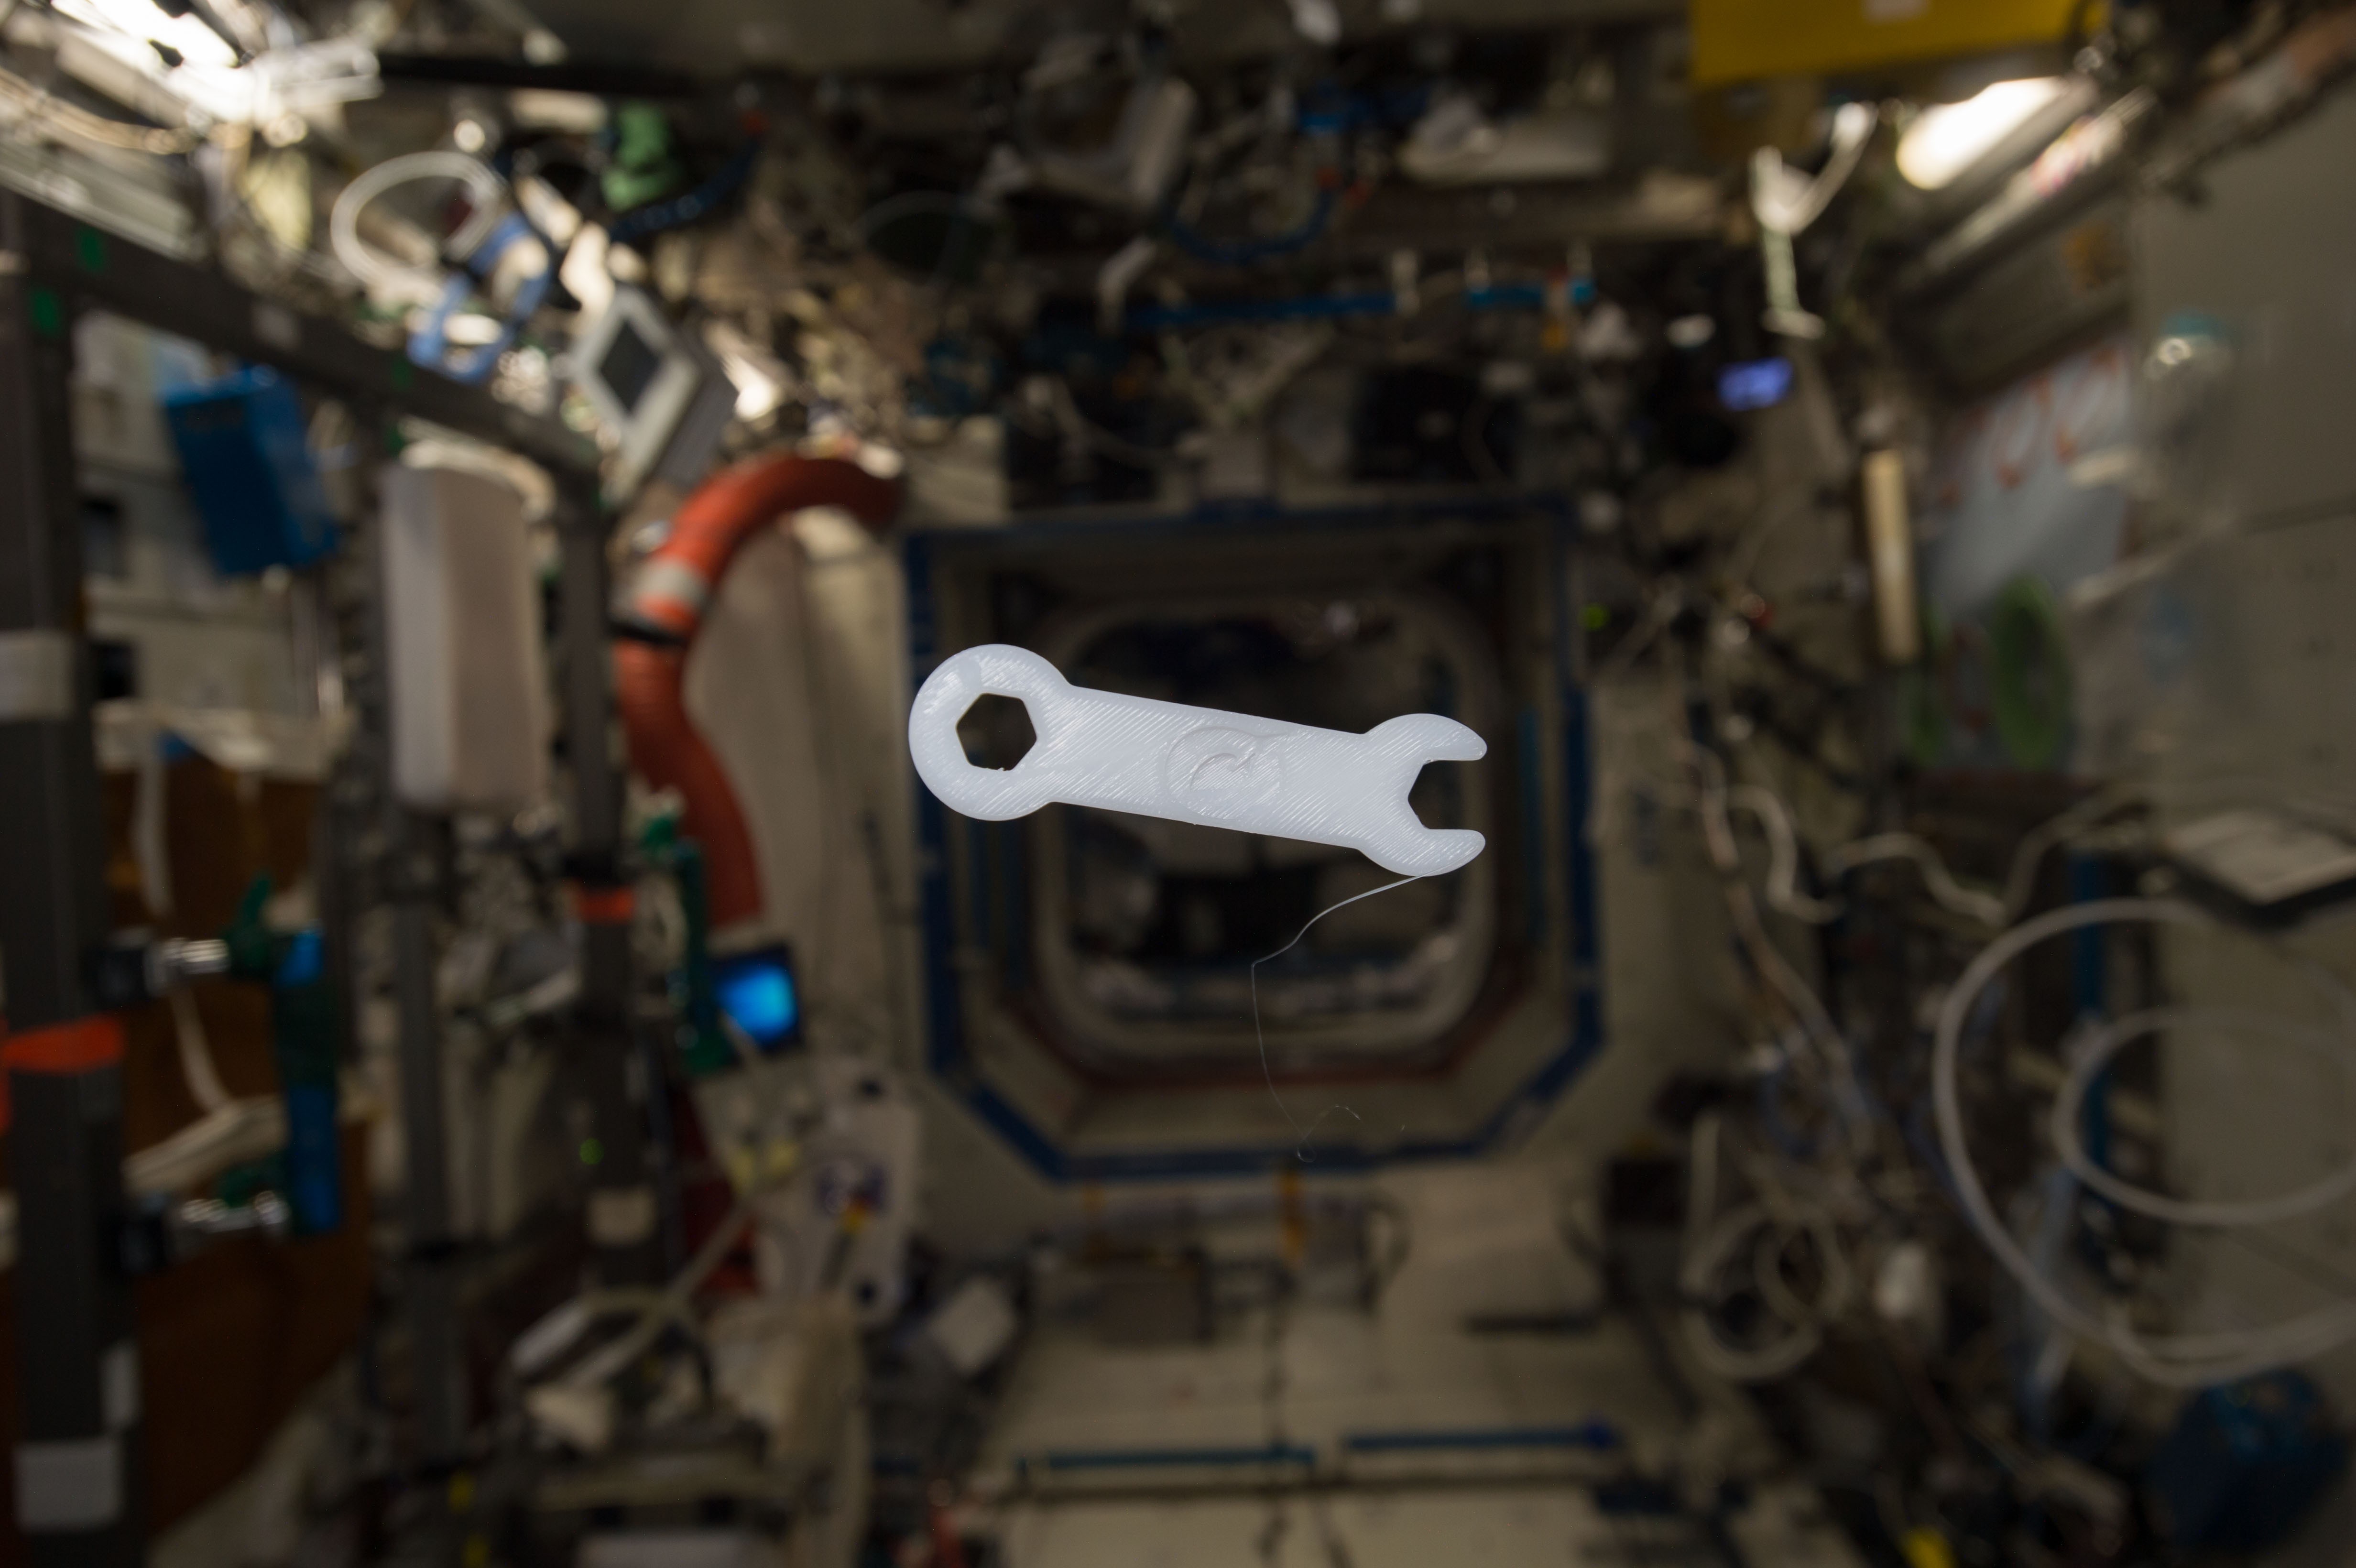 Chave fabricada com impressora 3D na ISS (Foto: NASA)